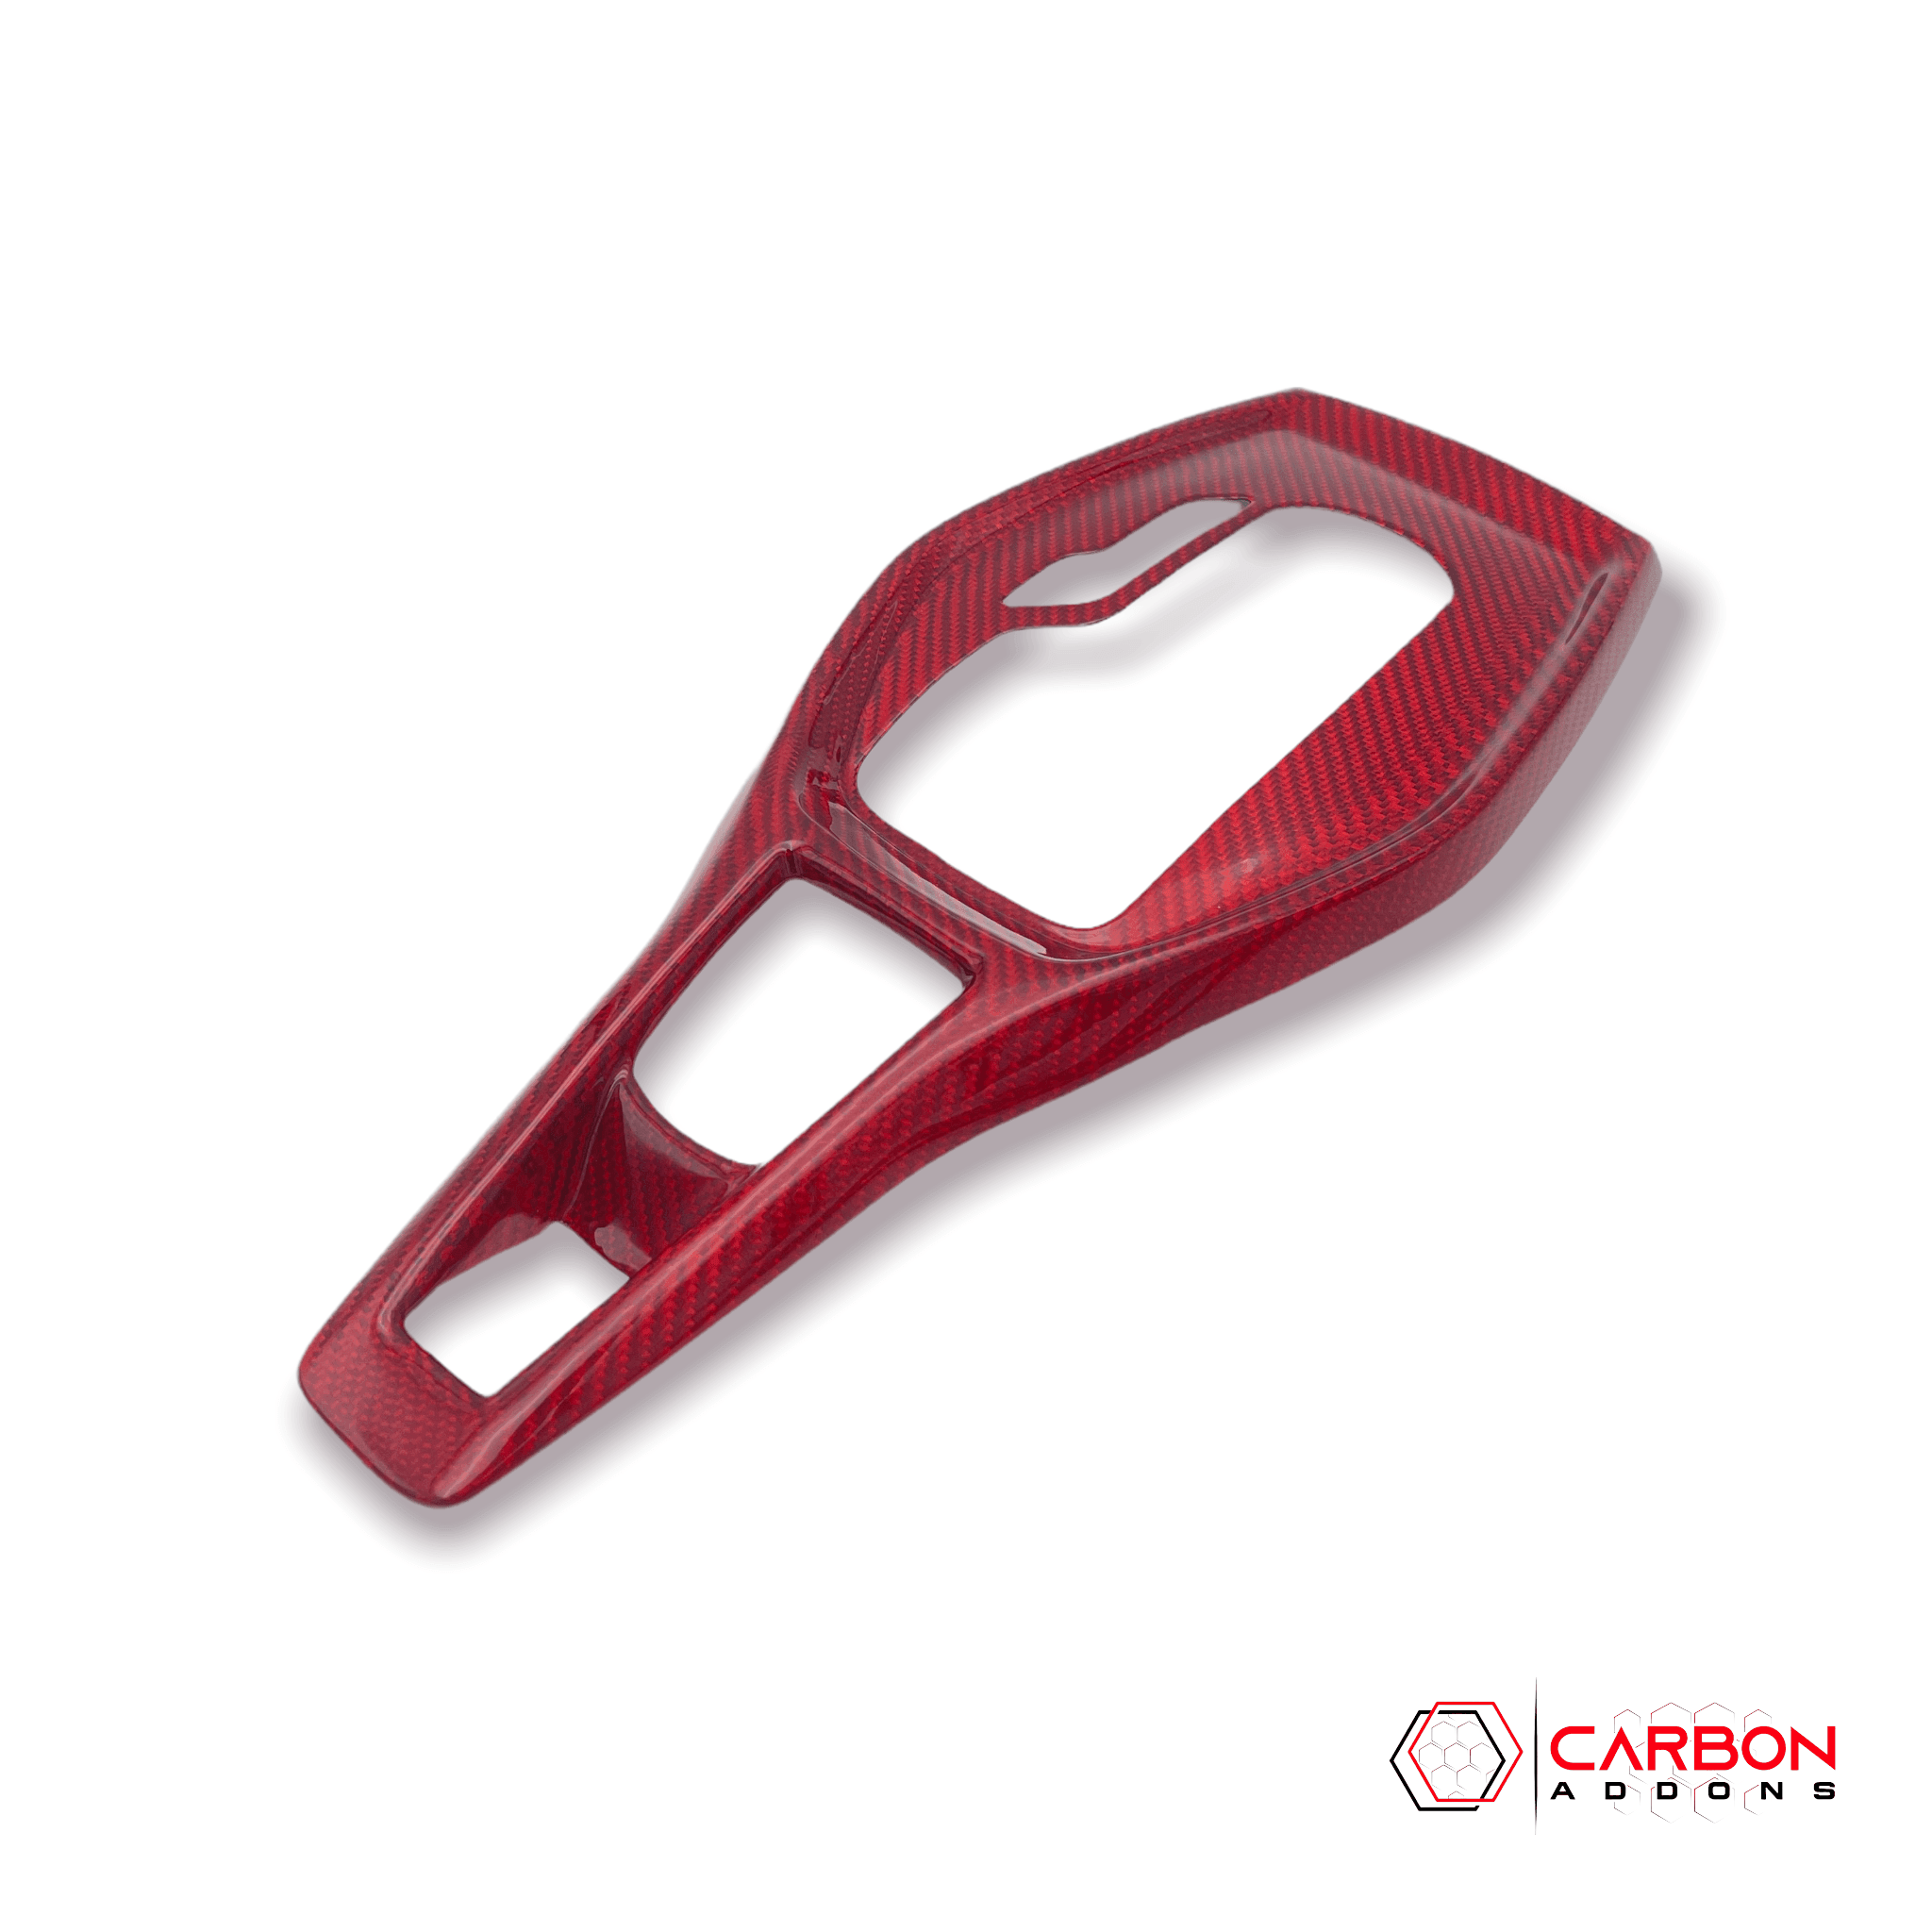 Chevy Camaro 2016-2024 Real Carbon Fiber Gear Shift Chrome Trim Delete Cover - carbonaddons Carbon Fiber Parts, Accessories, Upgrades, Mods